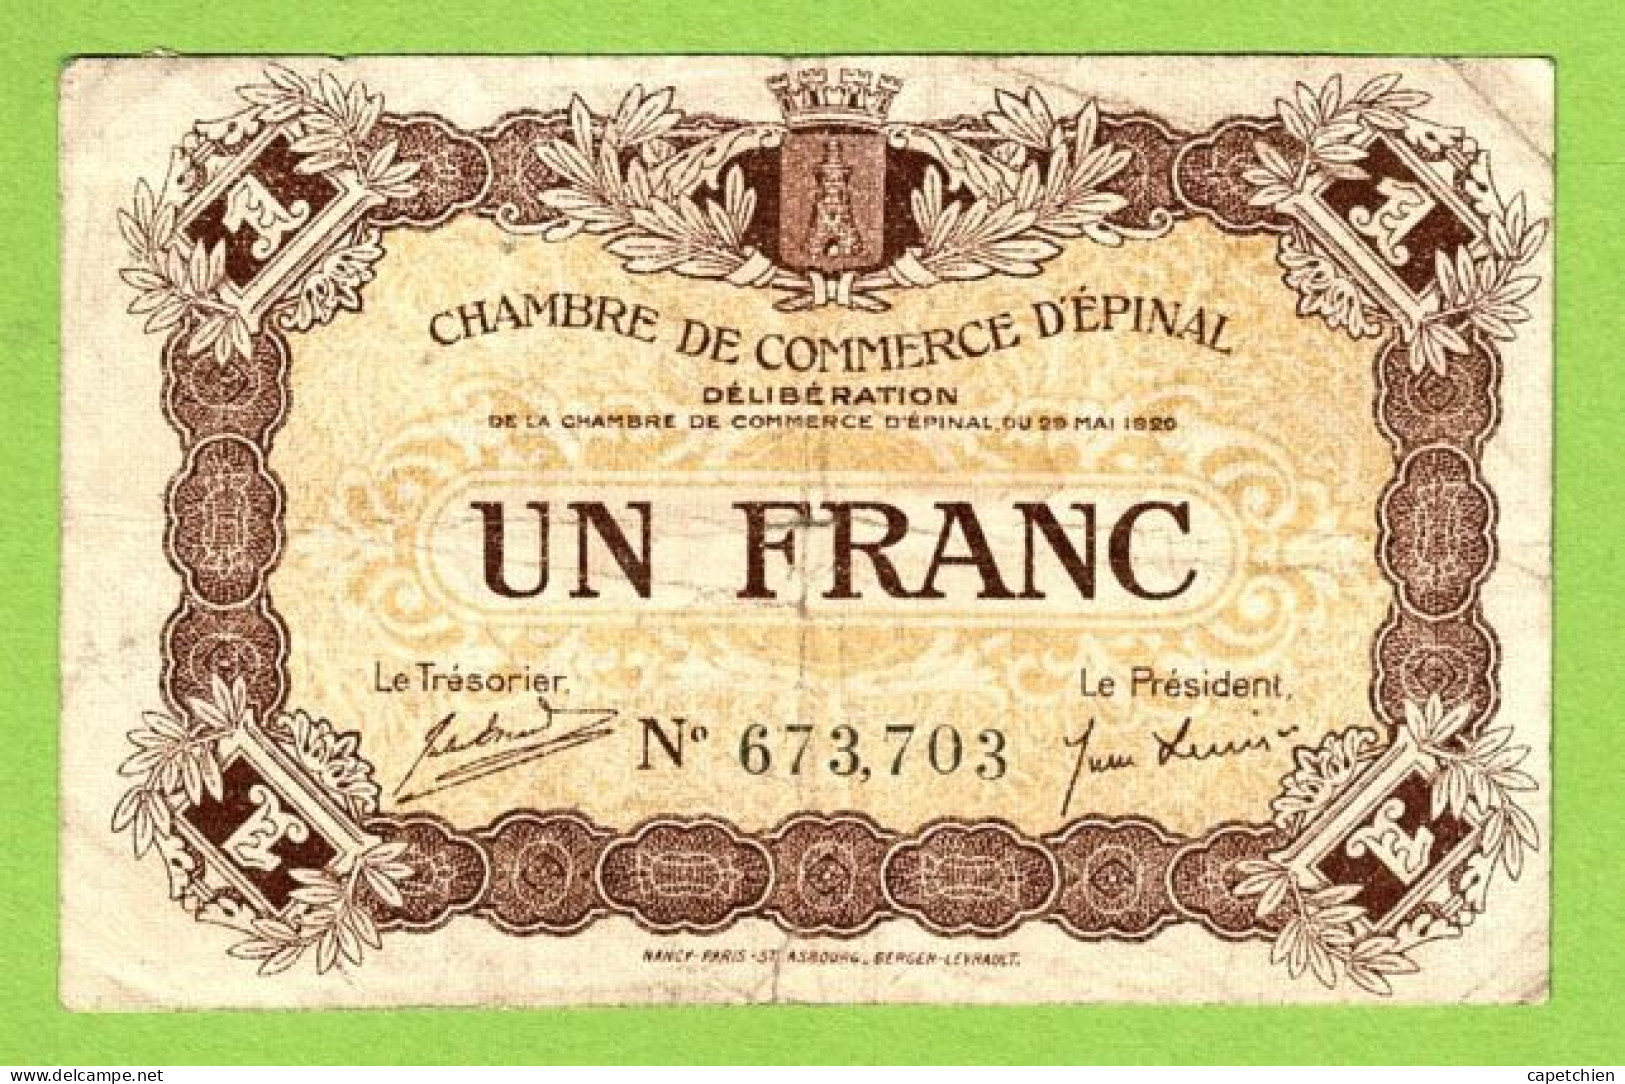 FRANCE / EPINAL / 1 FRANC/ 20 MAI 1920 / N° 673703 - Chambre De Commerce